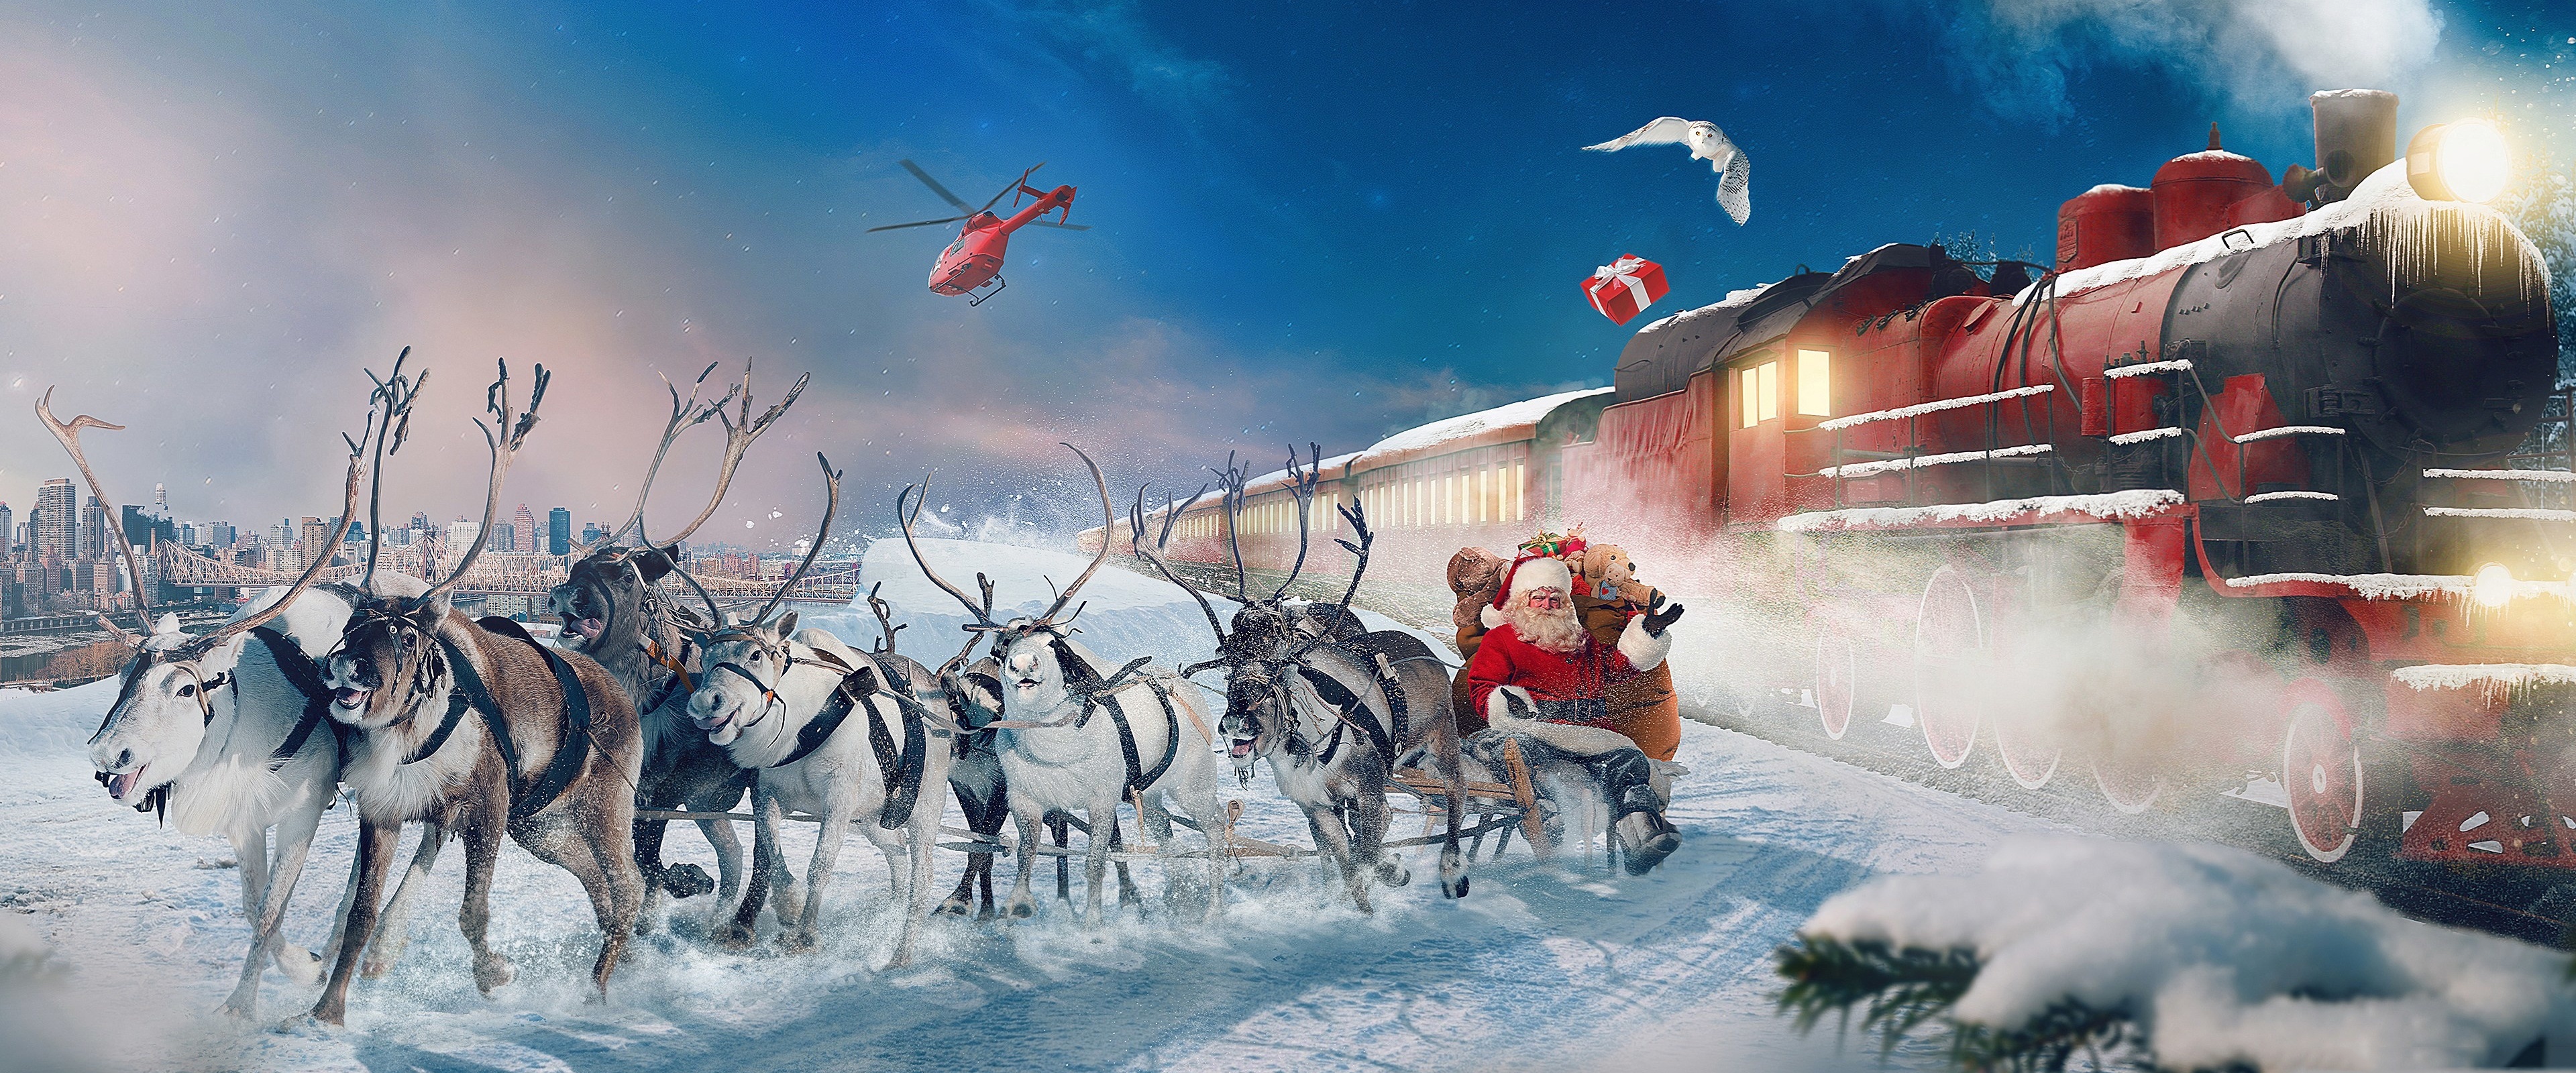 Reindeer Santa Sleigh Train Winter 3840x1600